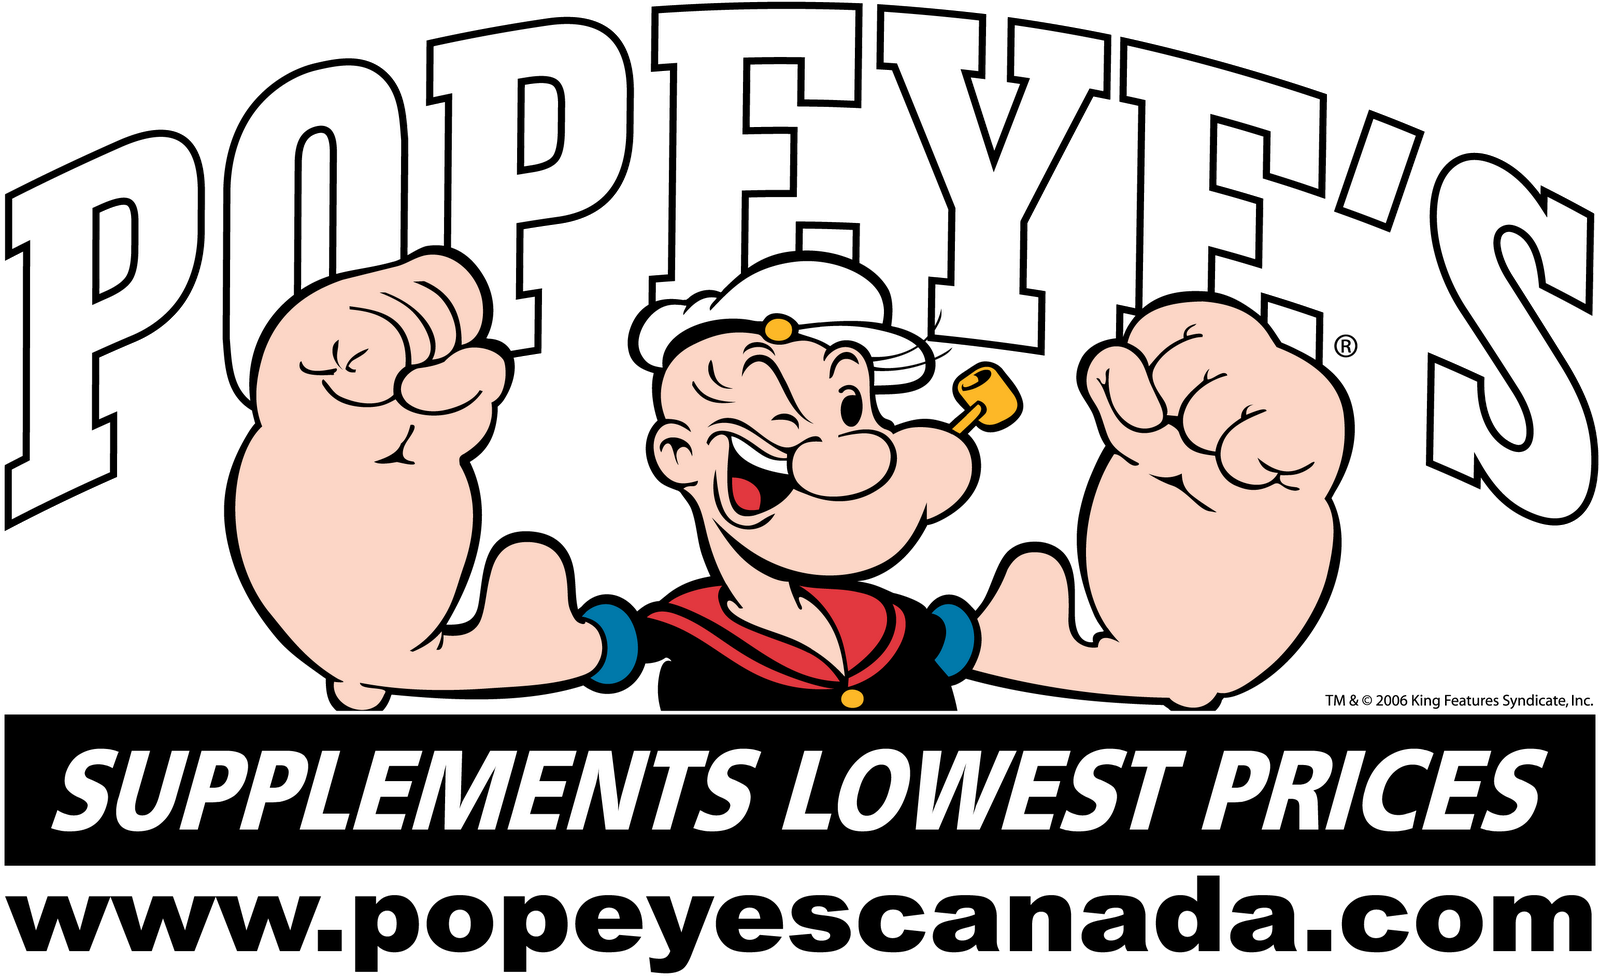 Popeyes Supplements Canada Logo photo - 1